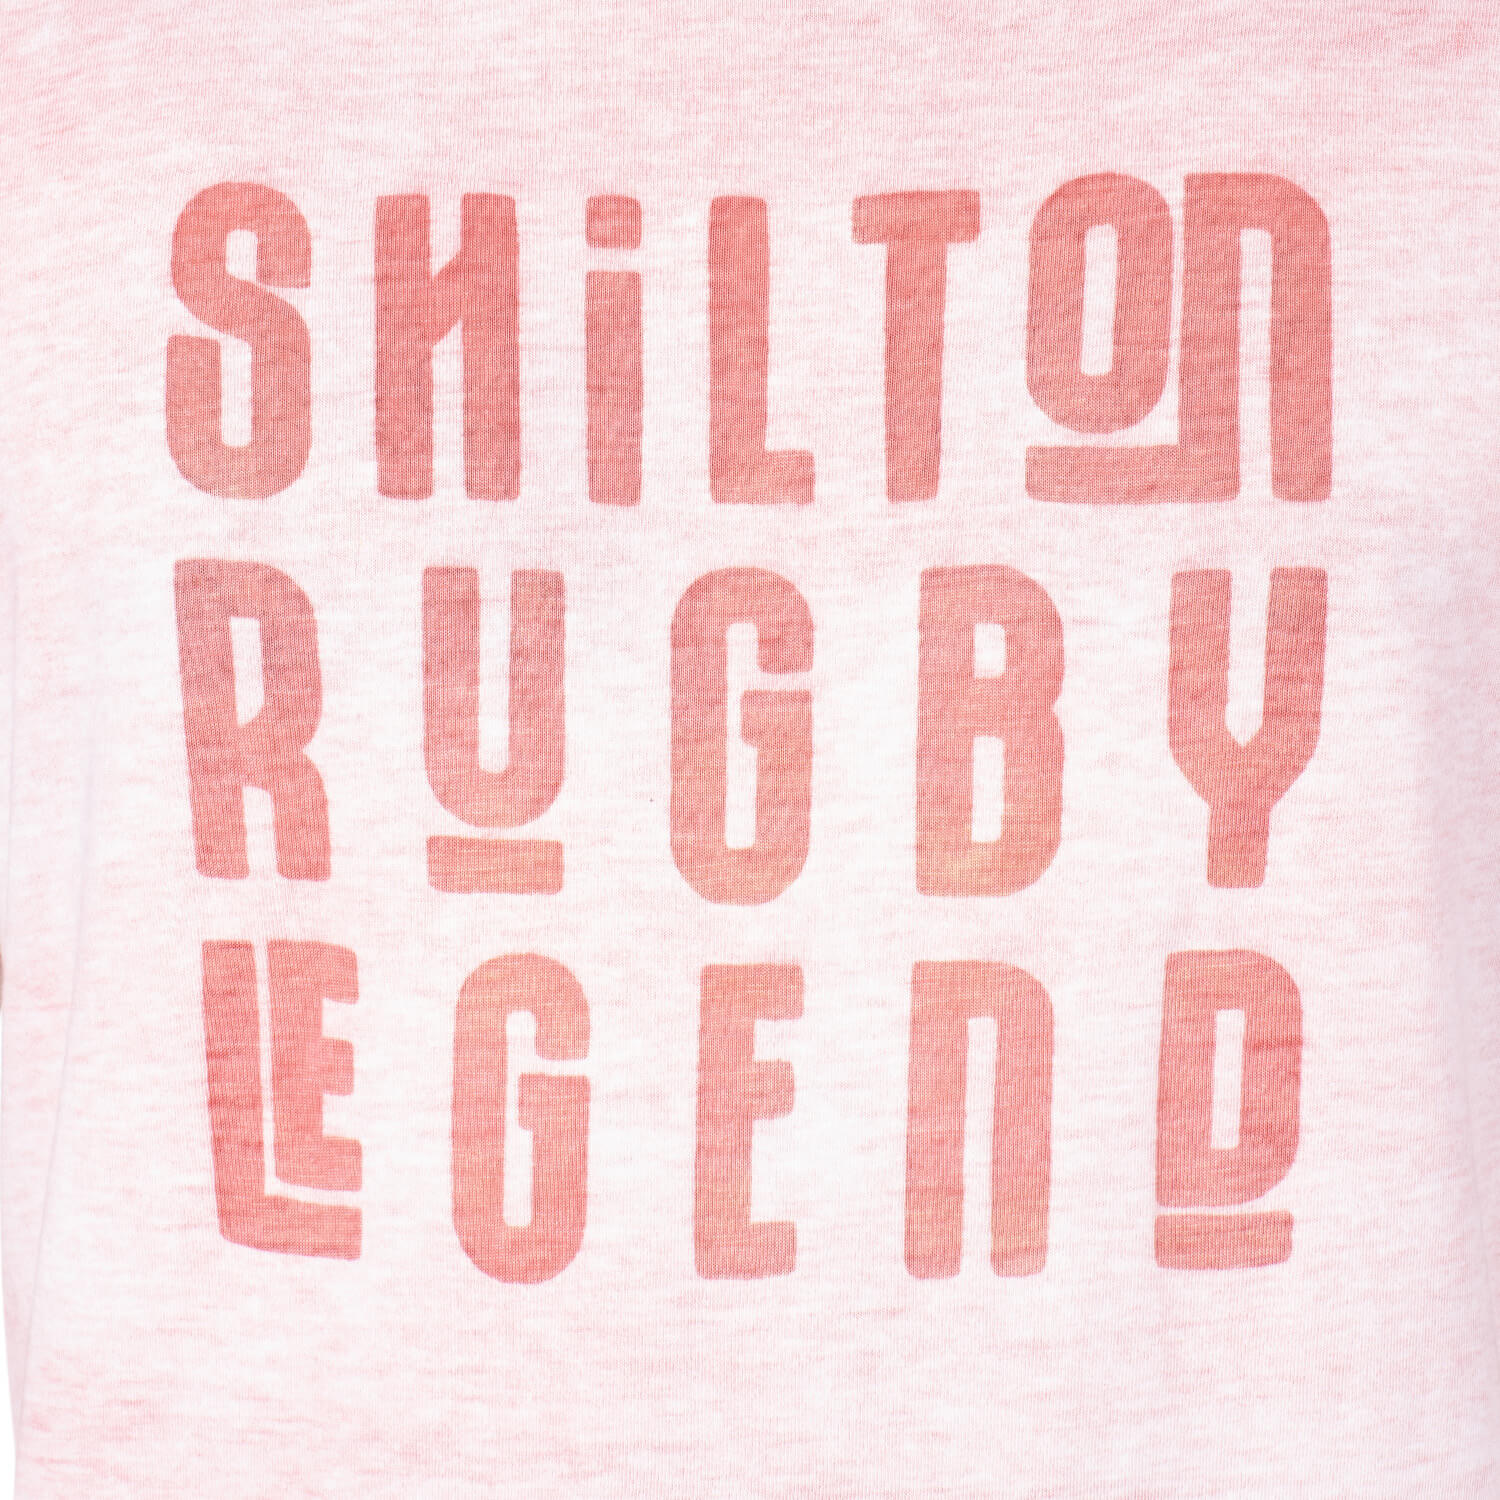 T-shirt rugby legend